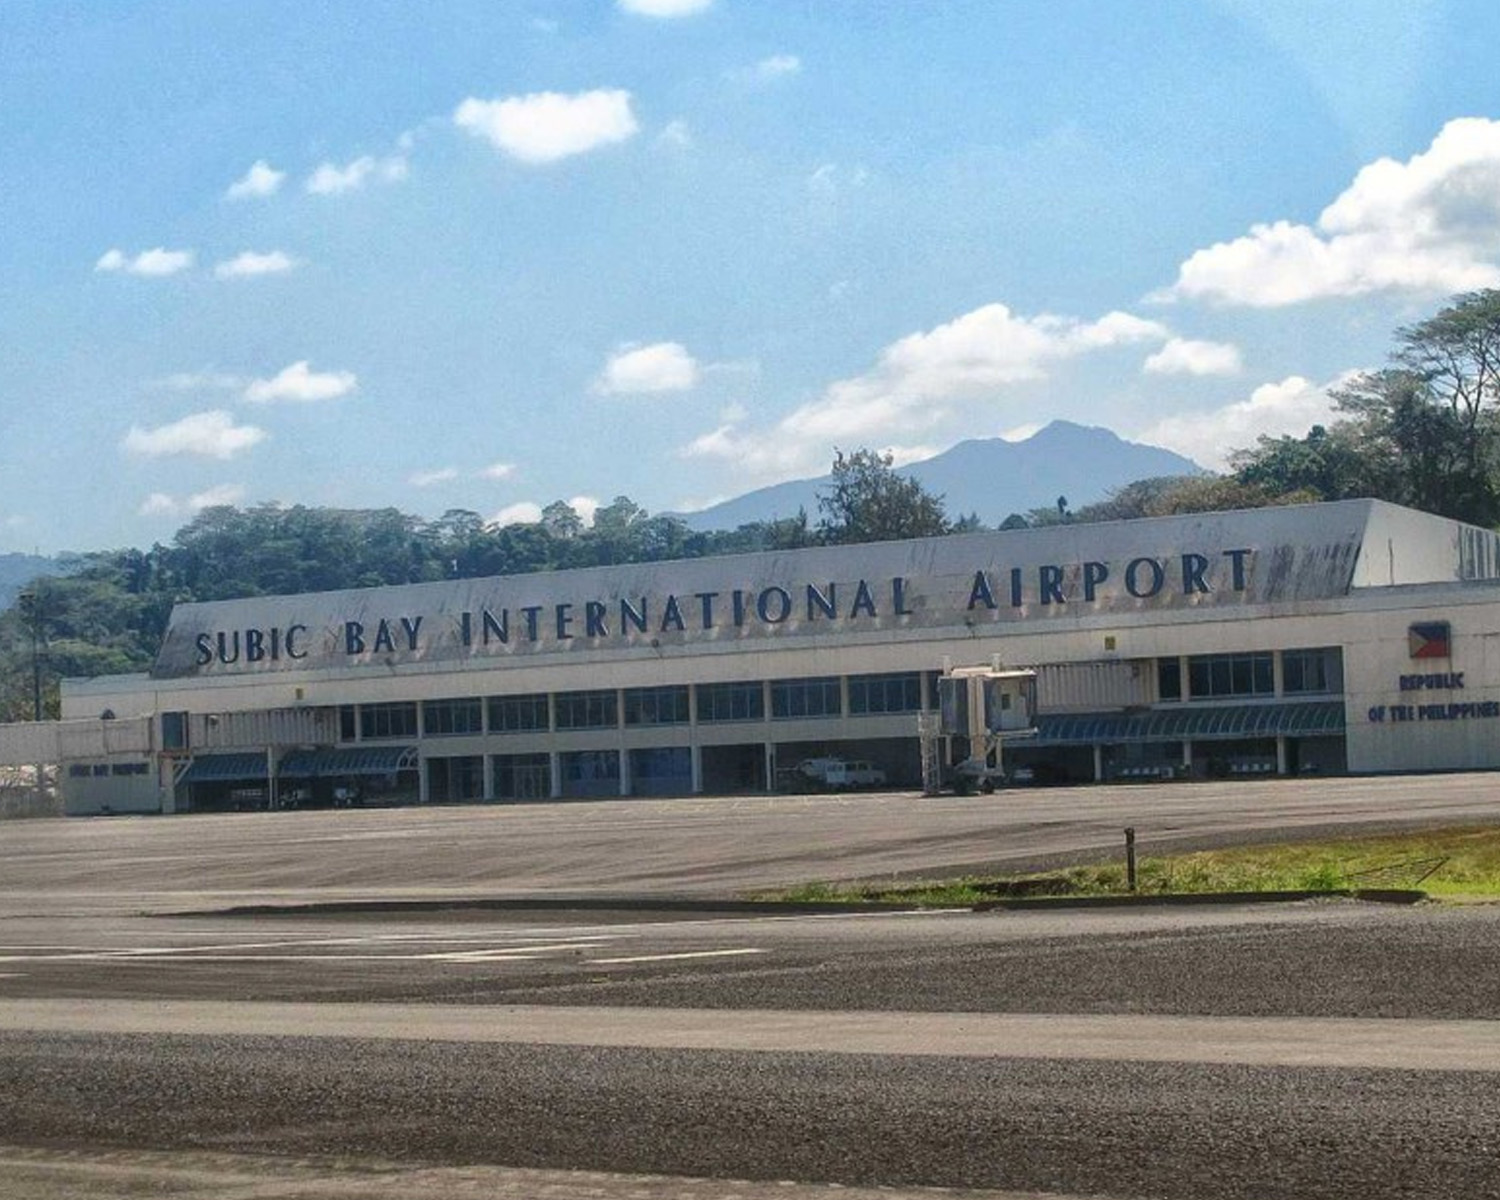 SUBIC BAY INTERNATIONAL AIRPORT